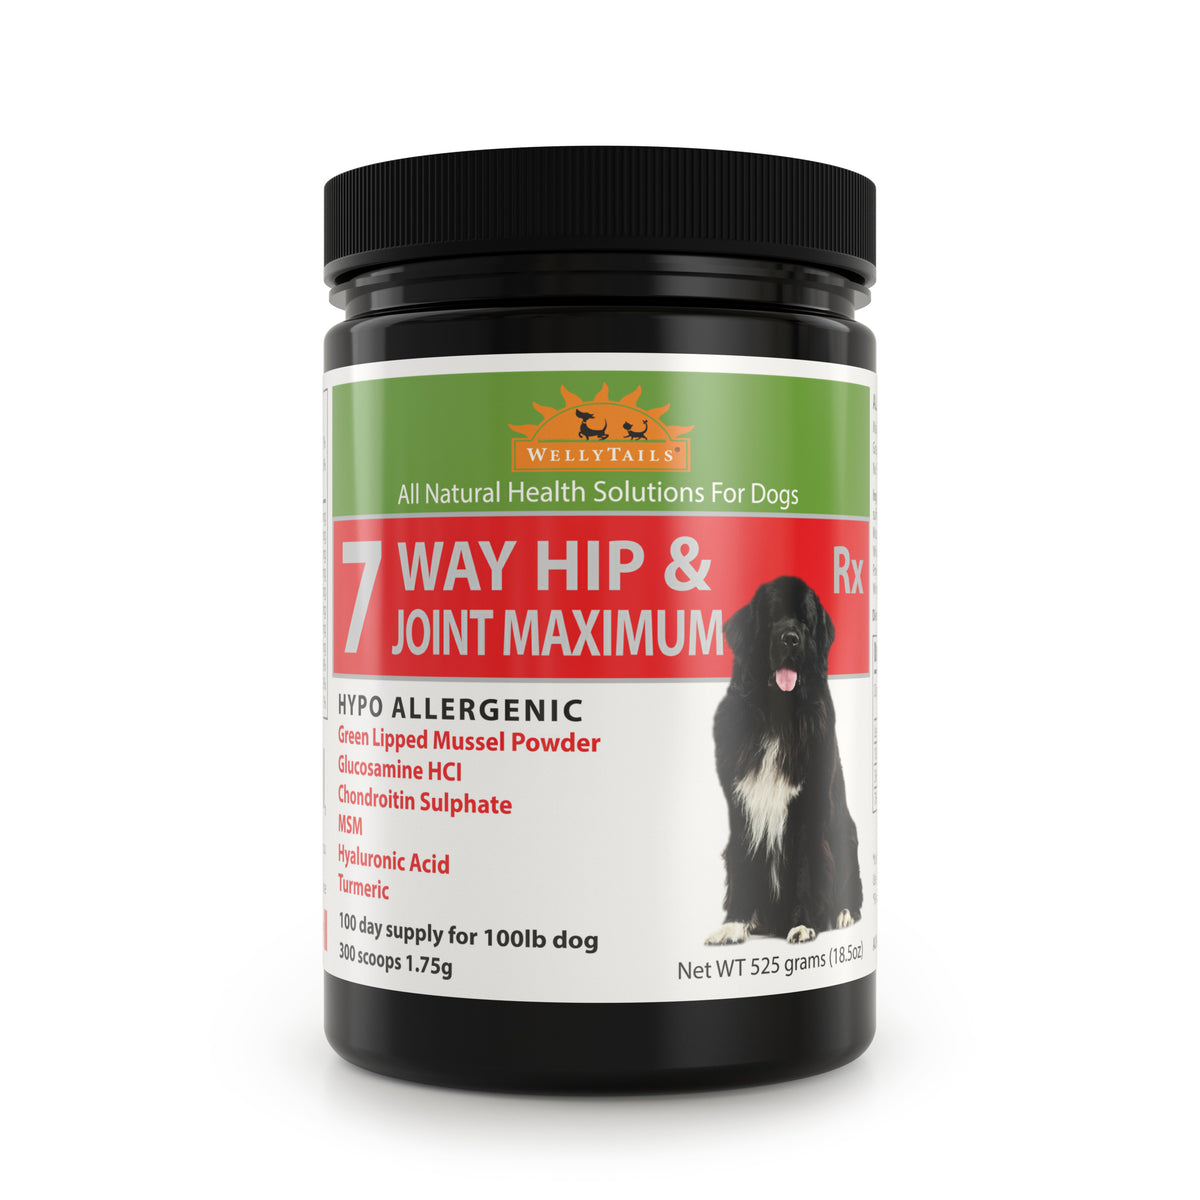 WellyTails Hypo-Allergenic Dog 7 Way Hip & Joint MAXIMUM